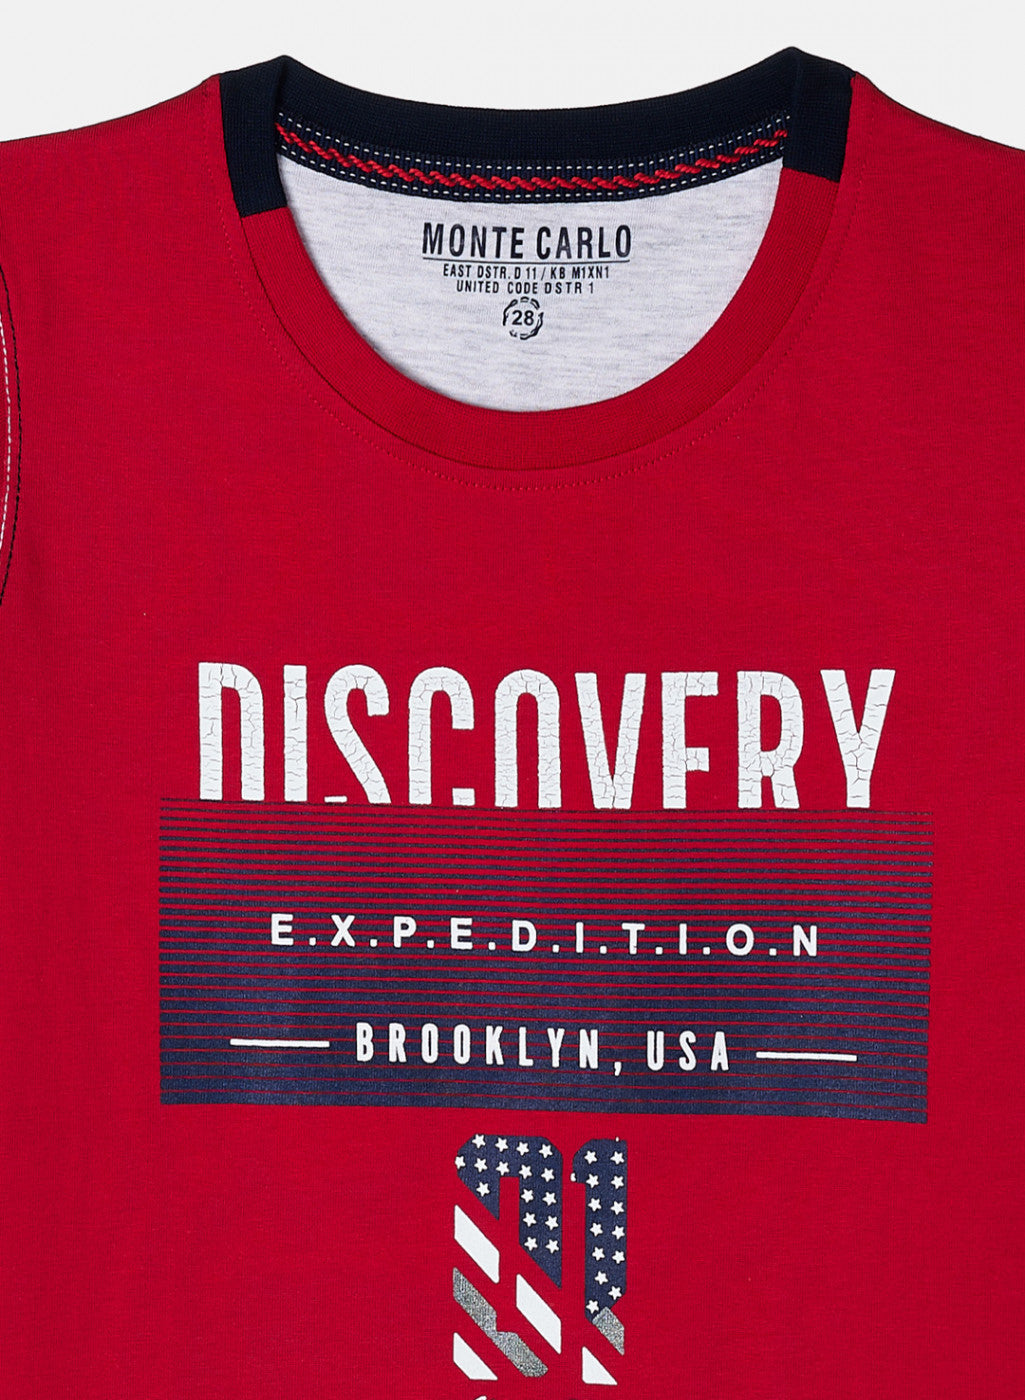 Boys Red Printed T-Shirt